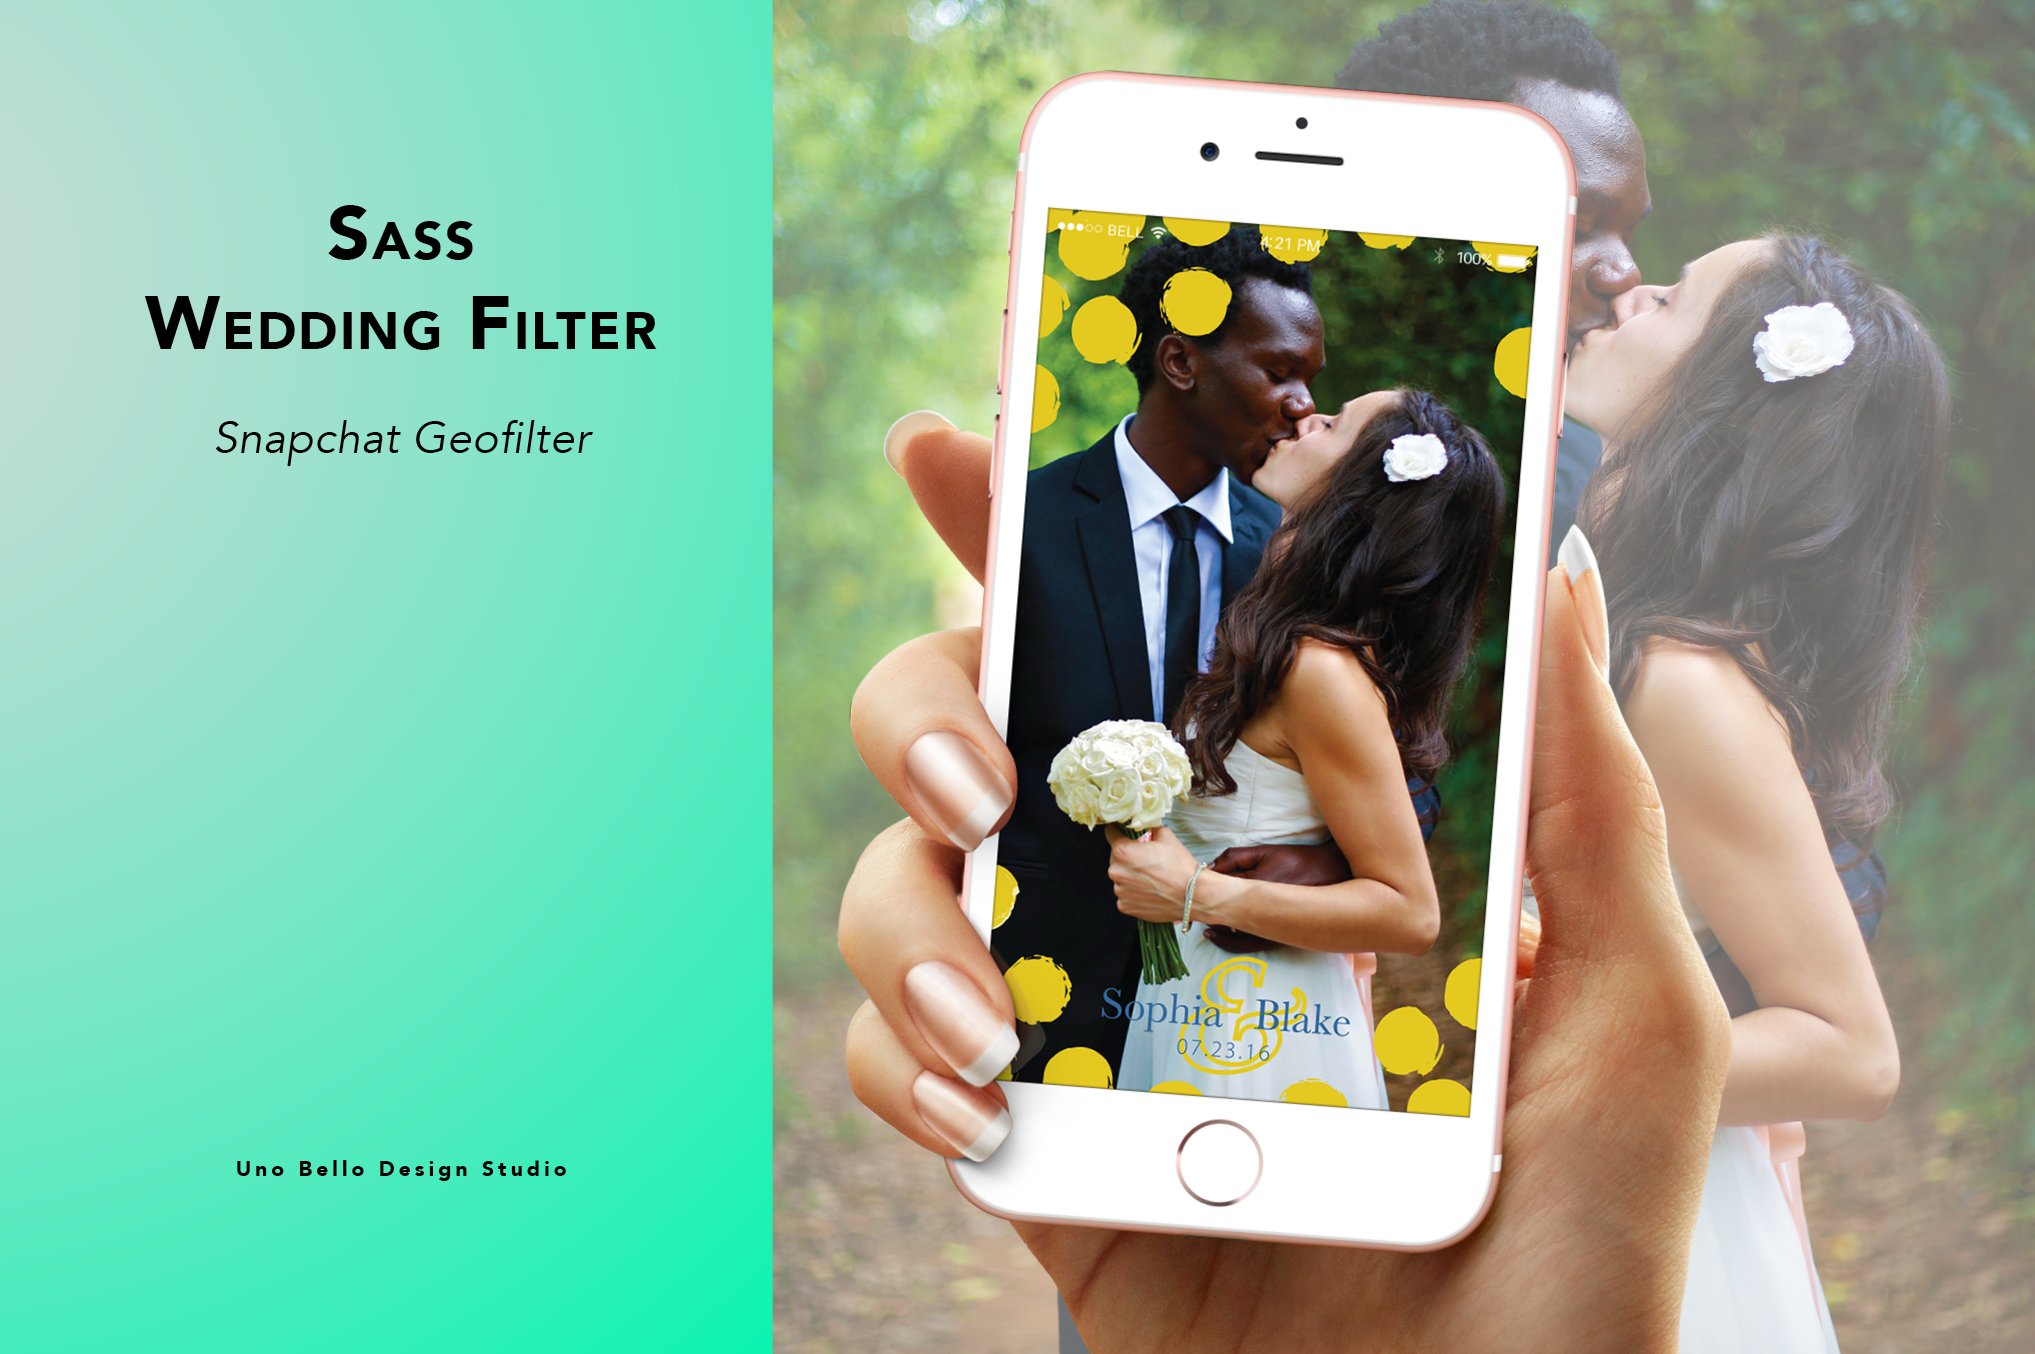 Sass Wedding Geofilter cover image.